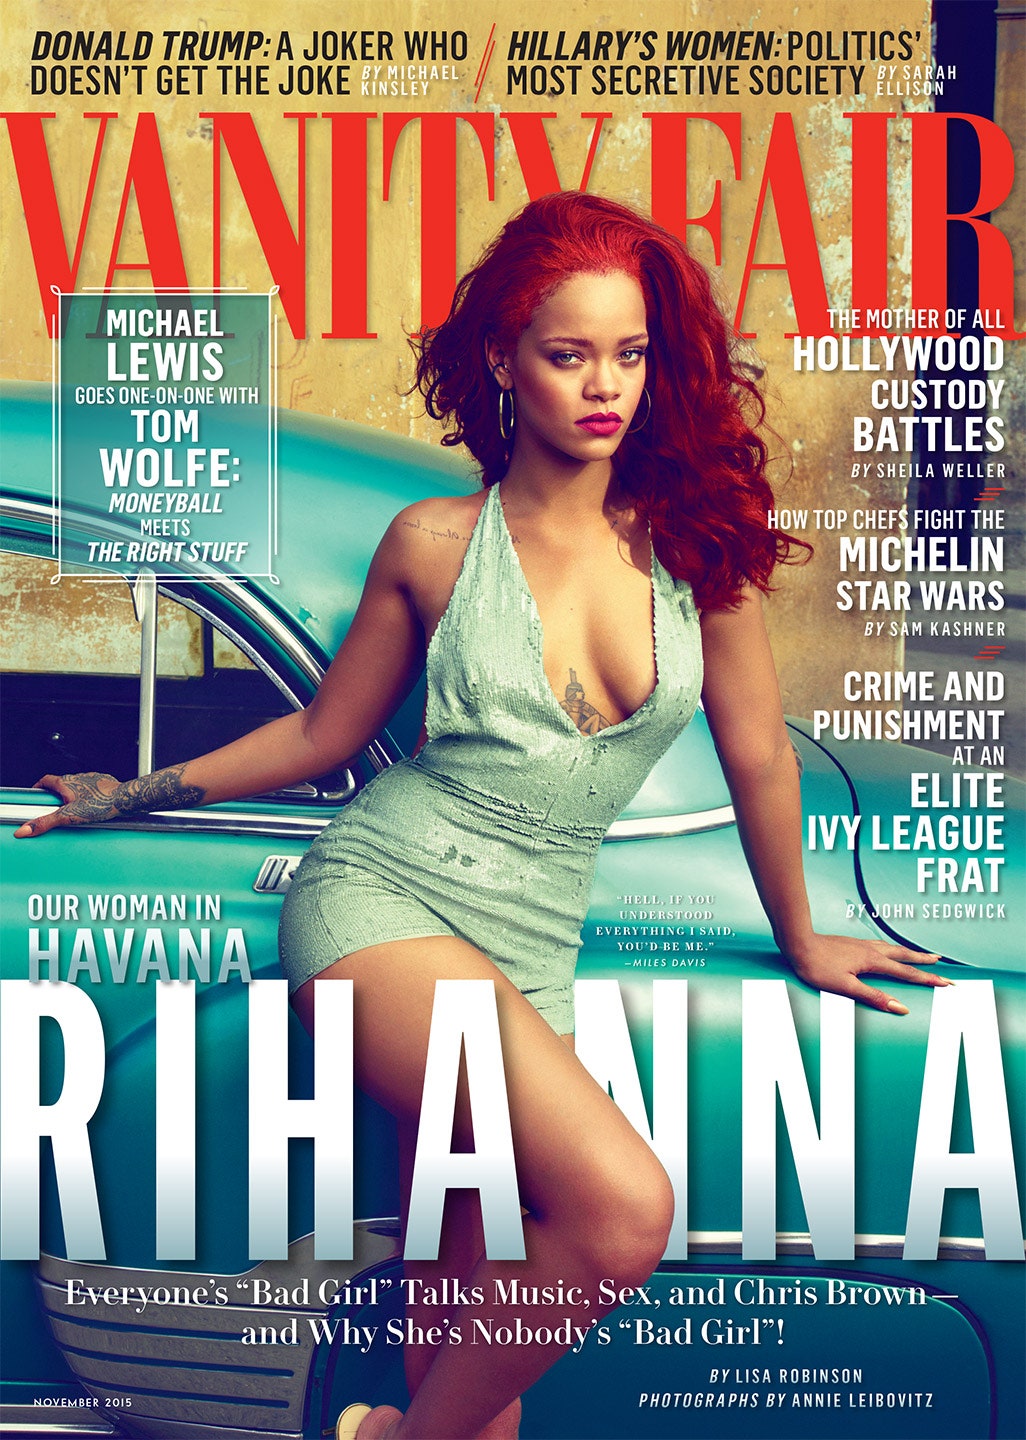 Rihanna in Cuba: The Cover Story | Vanity Fair